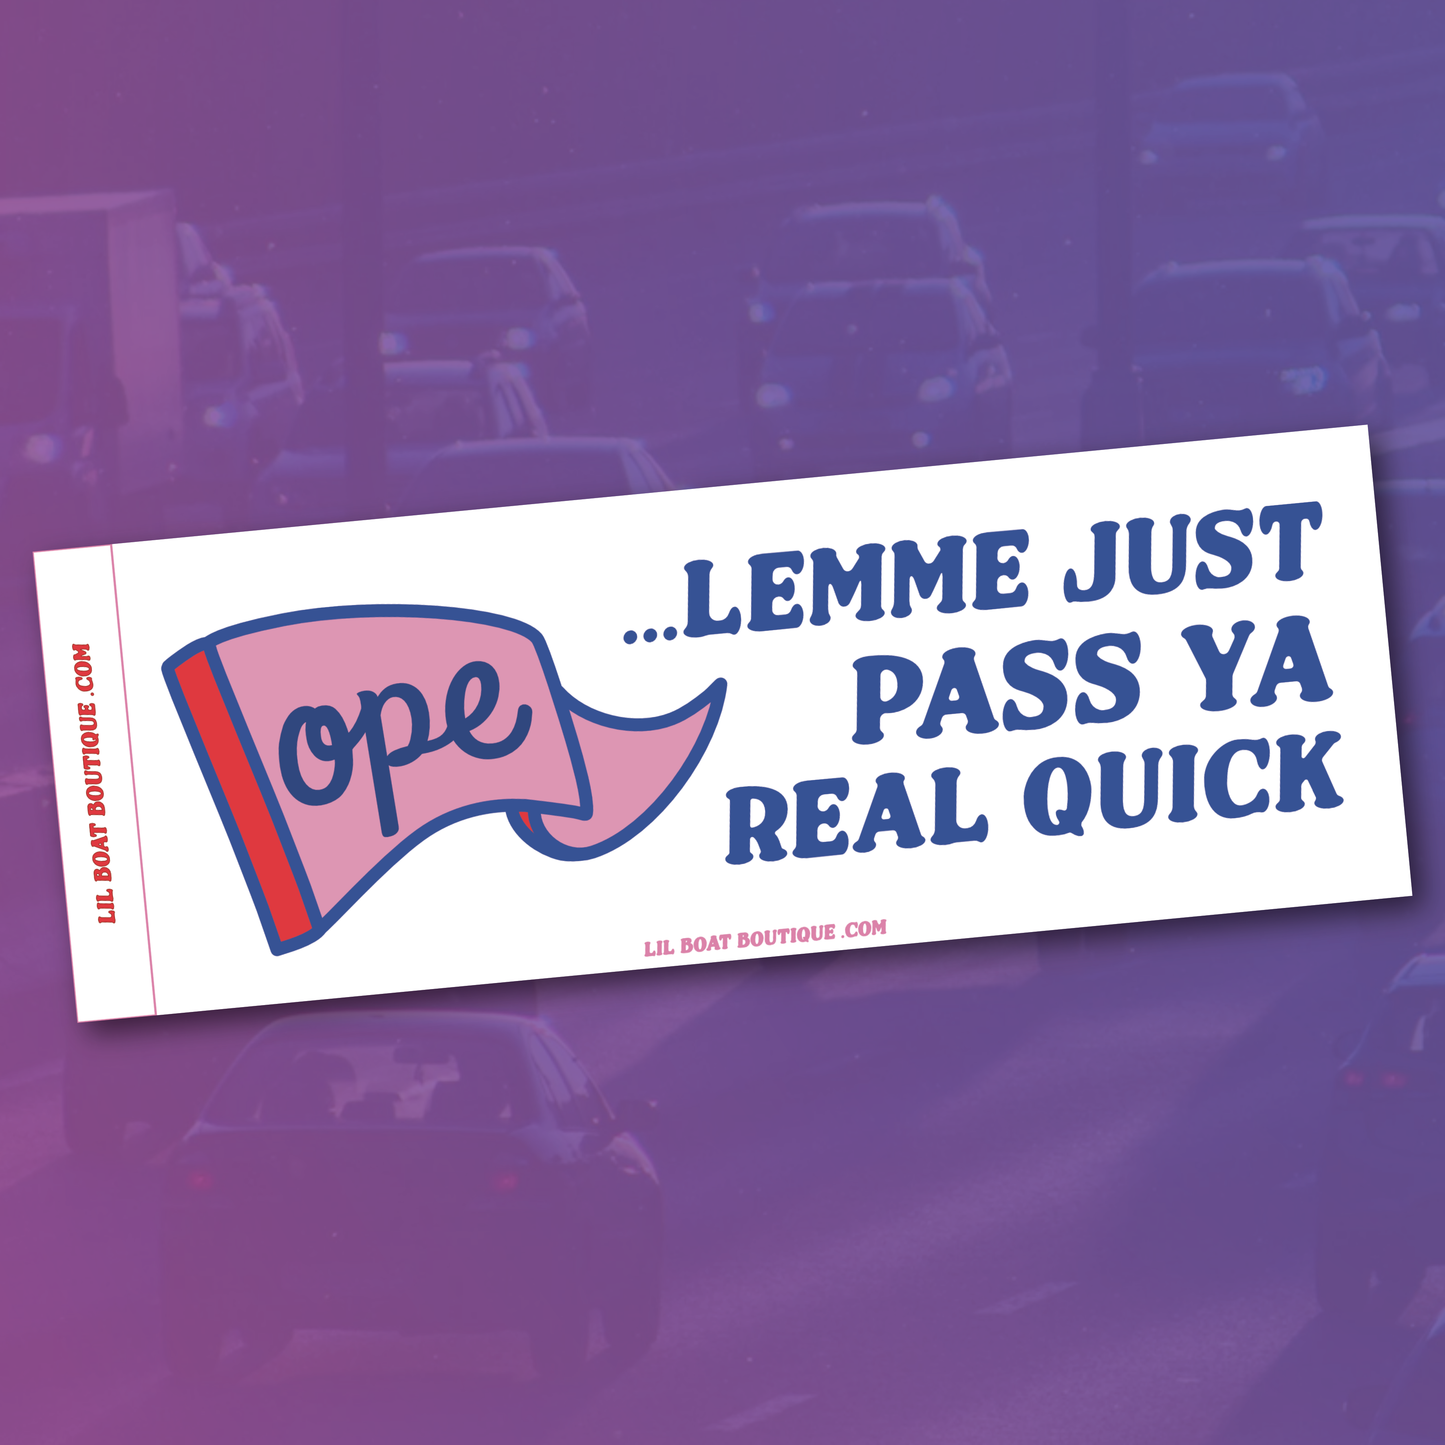 Ope Let me... - Bumper Sticker